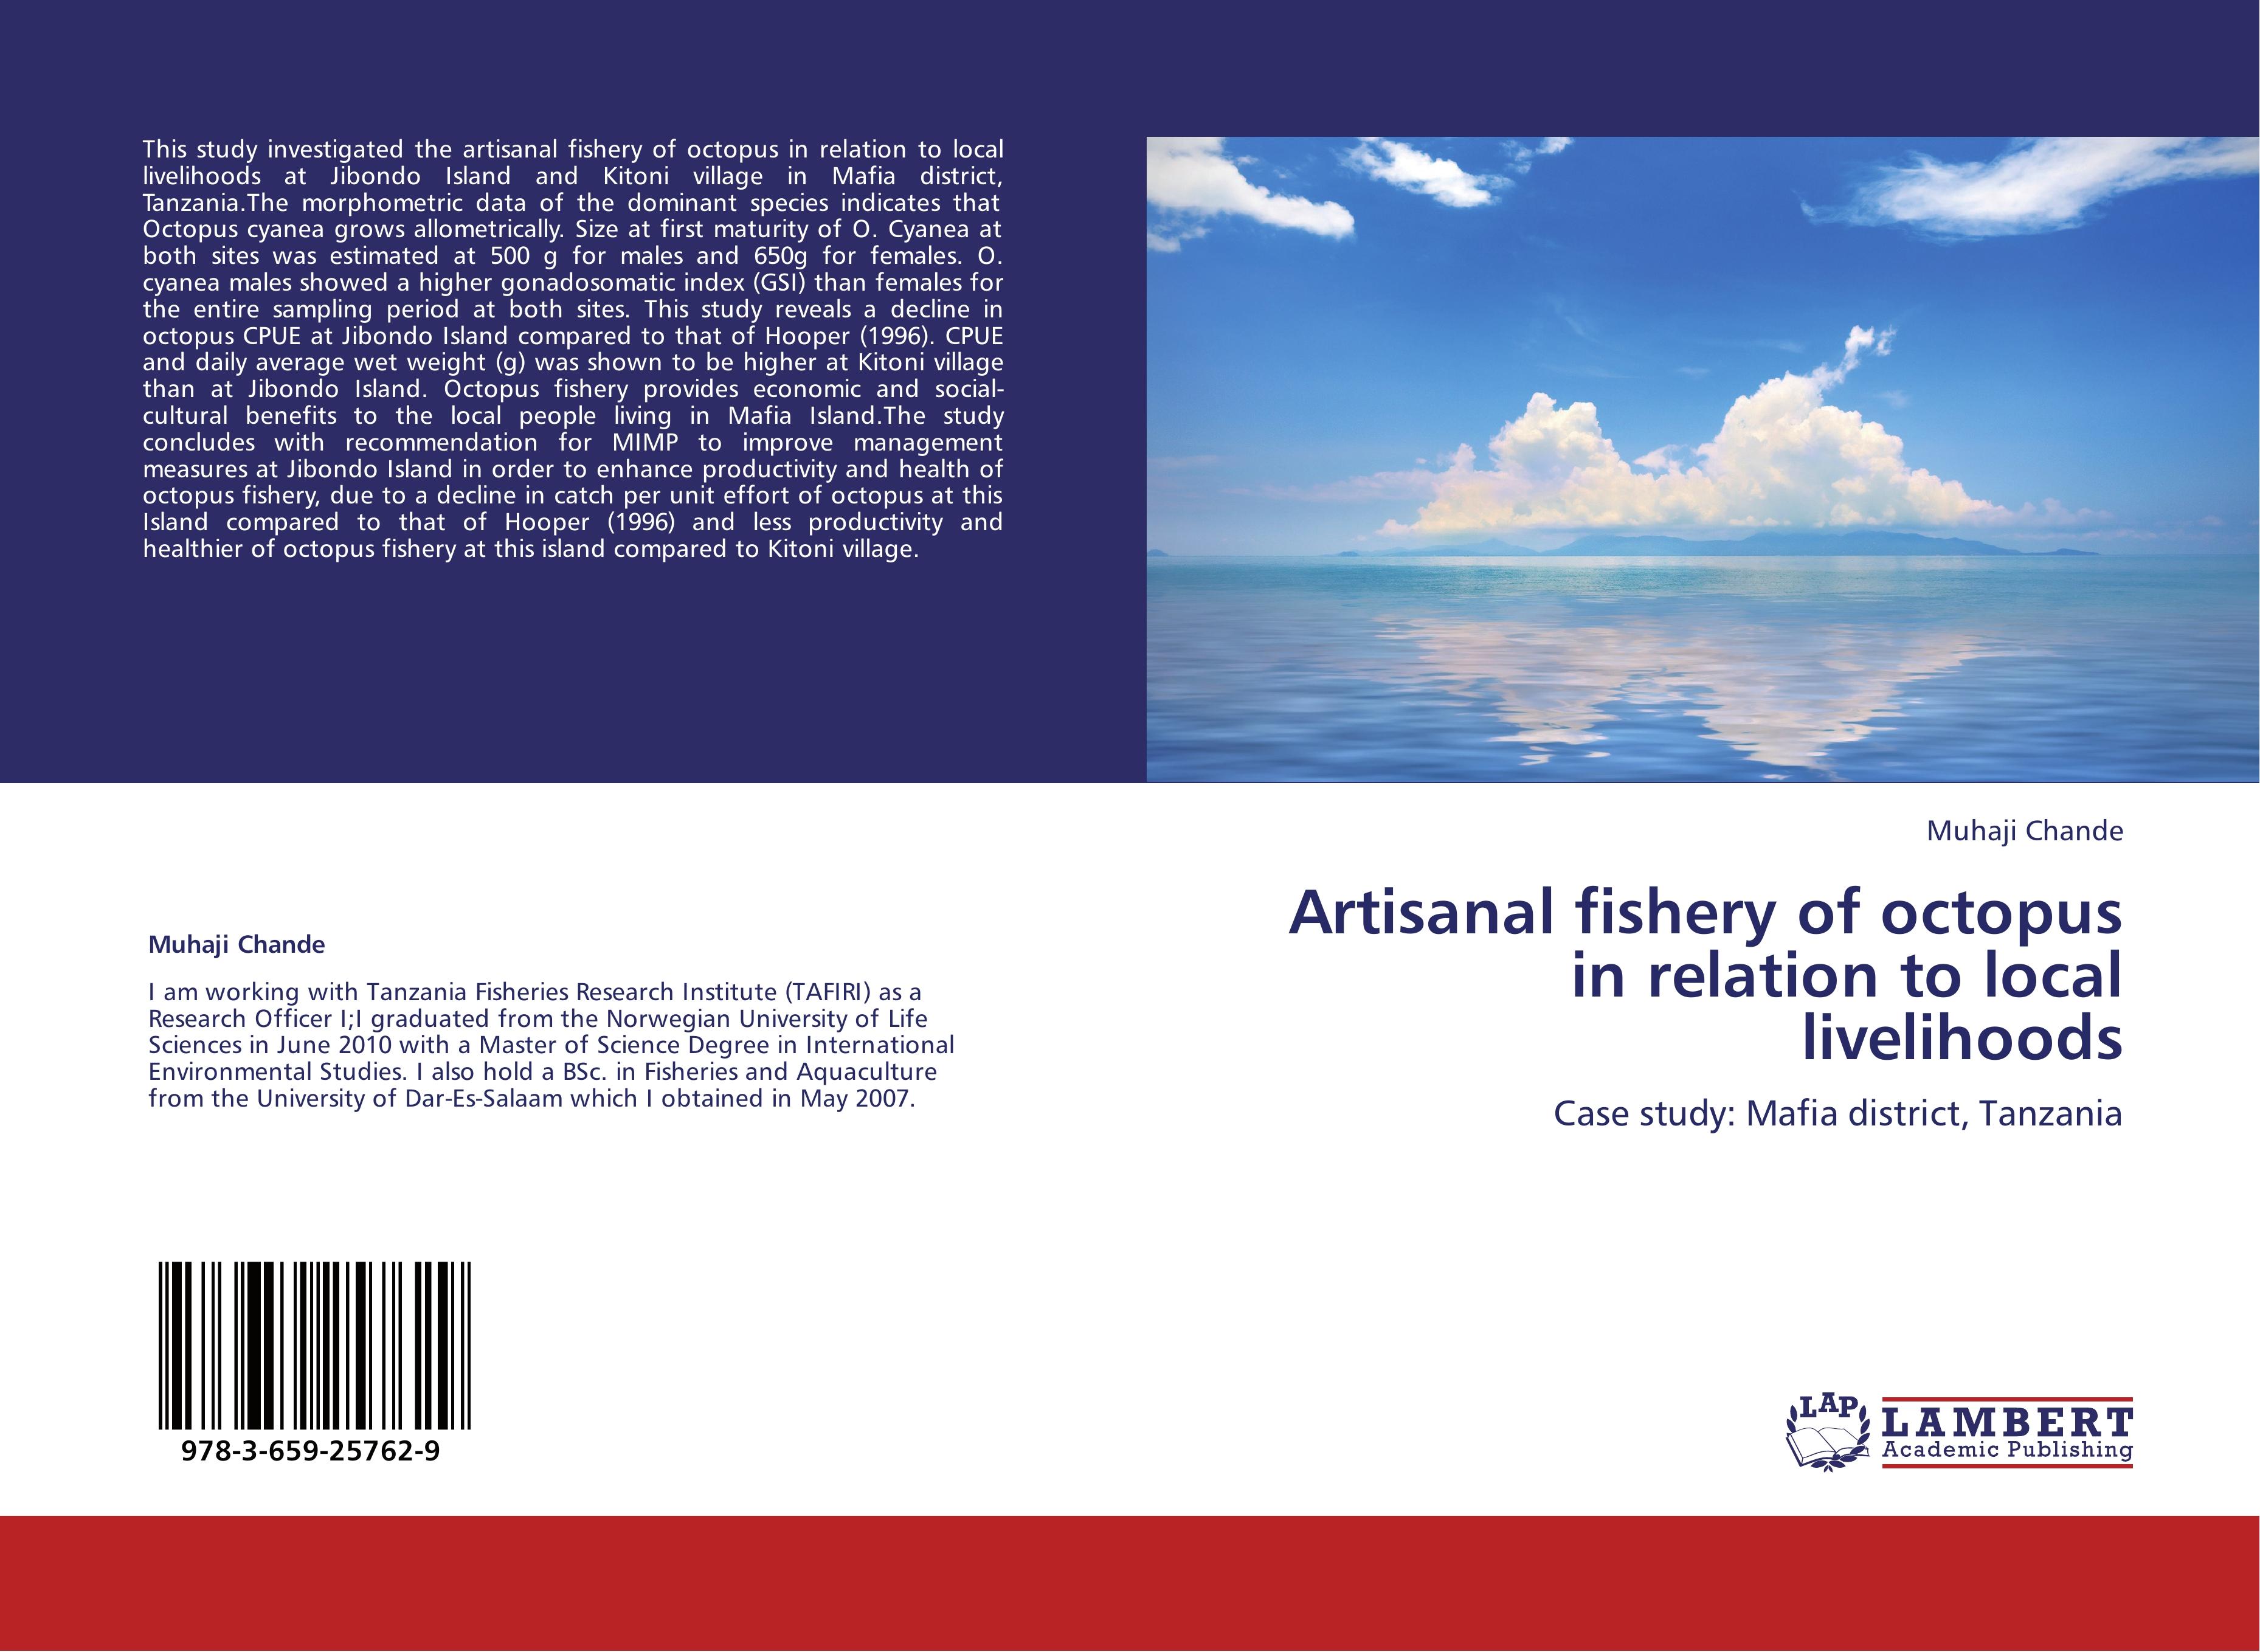 Artisanal fishery of octopus in relation to local livelihoods / Case study: Mafia district, Tanzania / Muhaji Chande / Taschenbuch / Paperback / 76 S. / Englisch / 2012 / EAN 9783659257629 - Chande, Muhaji